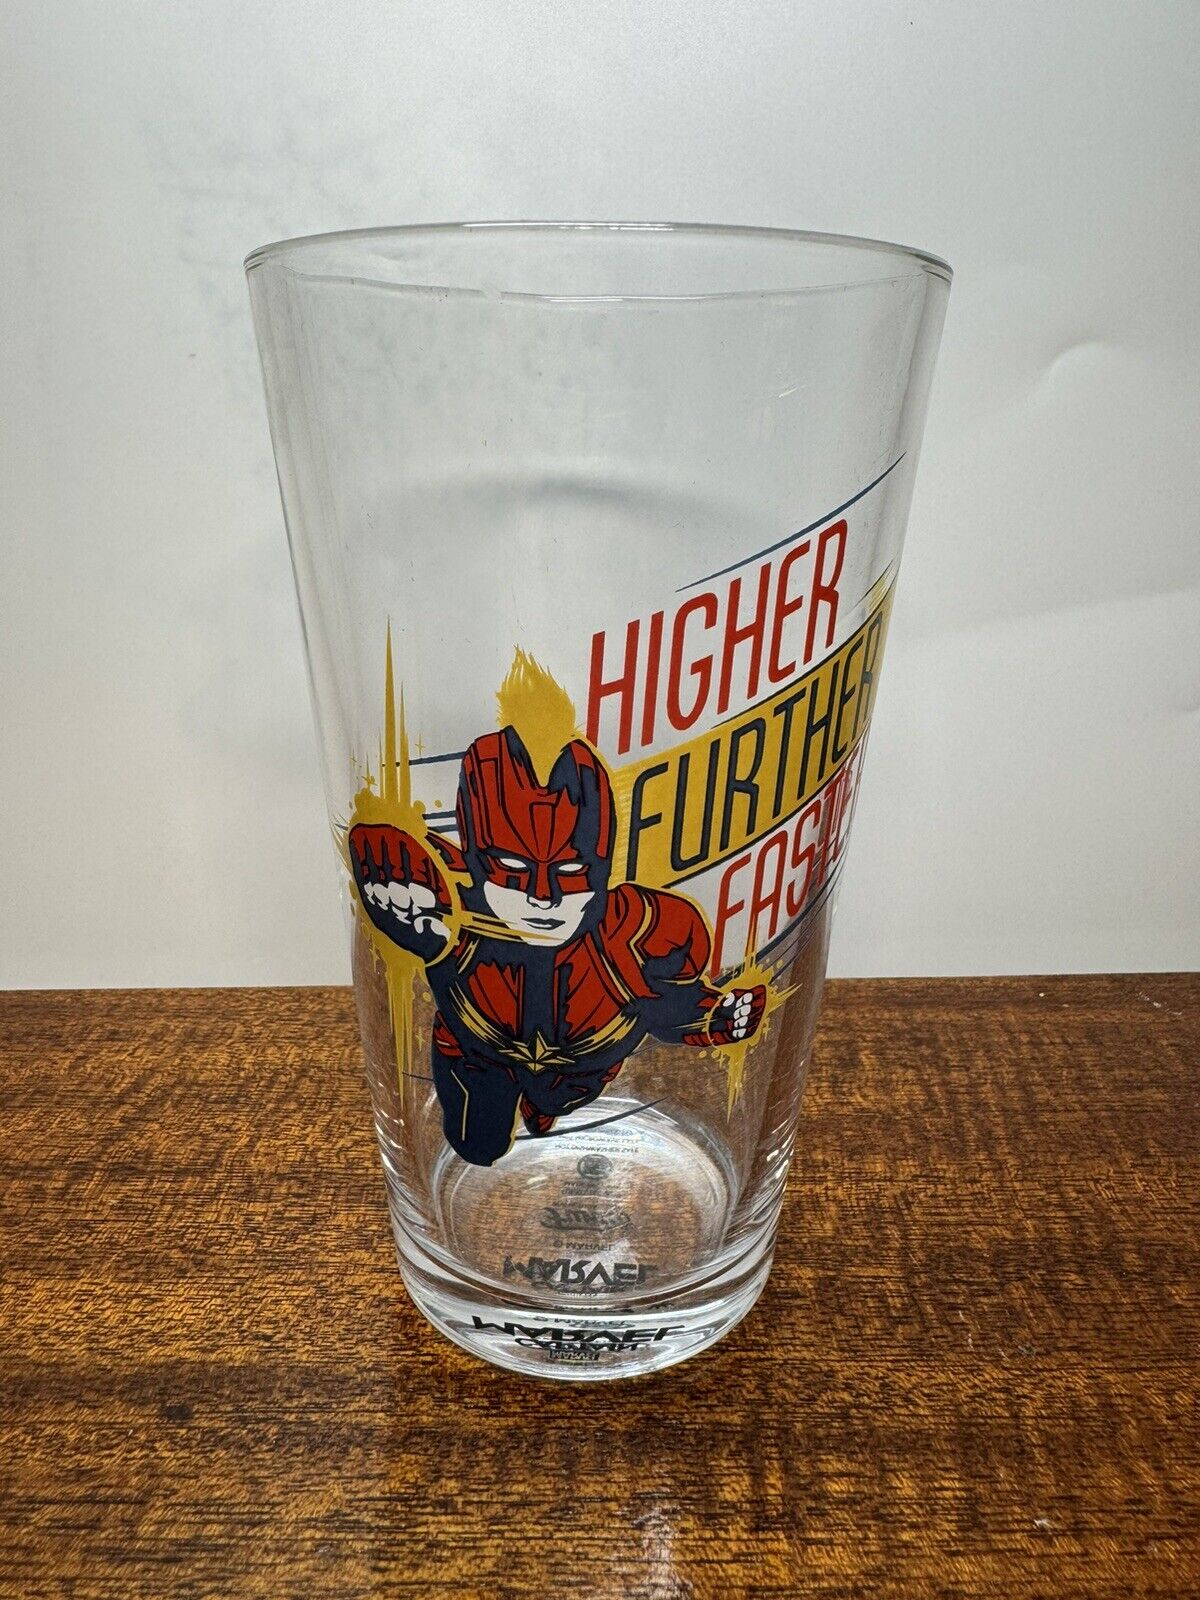 Captain Marvel “Higher Further Faster” Funko Pint Glass